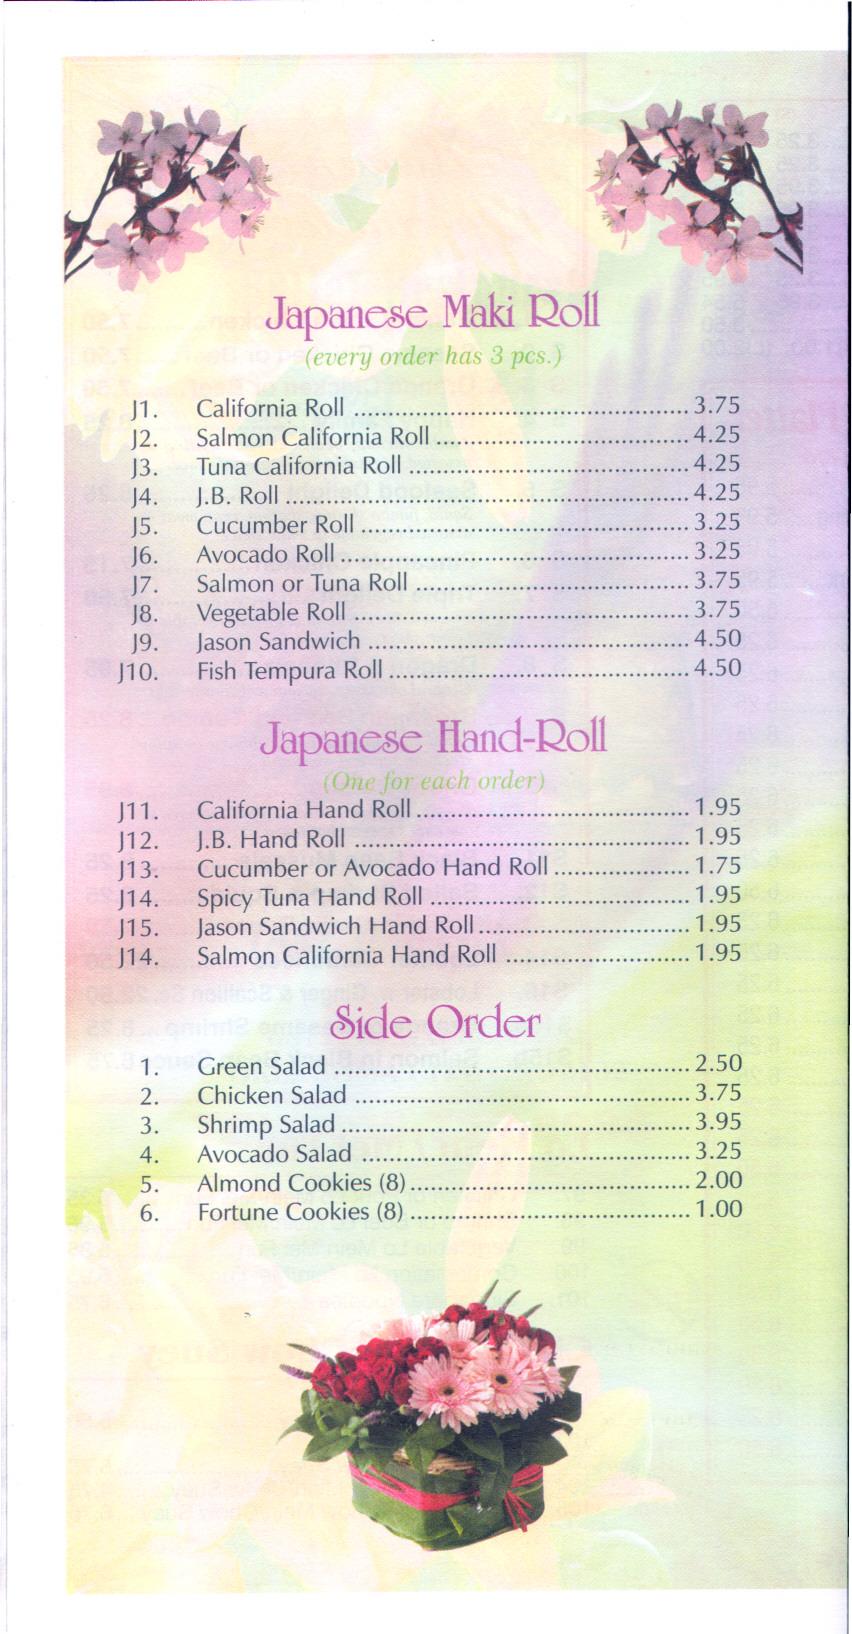 Japanese Maki Roll (n 'ry o....1as ) LA J1. California Roll 3.75 J2. Salmon California Roll 4.25 J3. Tuna California Roll 4.25 J4. J.B. Roll 4.25 J5. Cucumber Roll J6. Avocado Roll p.